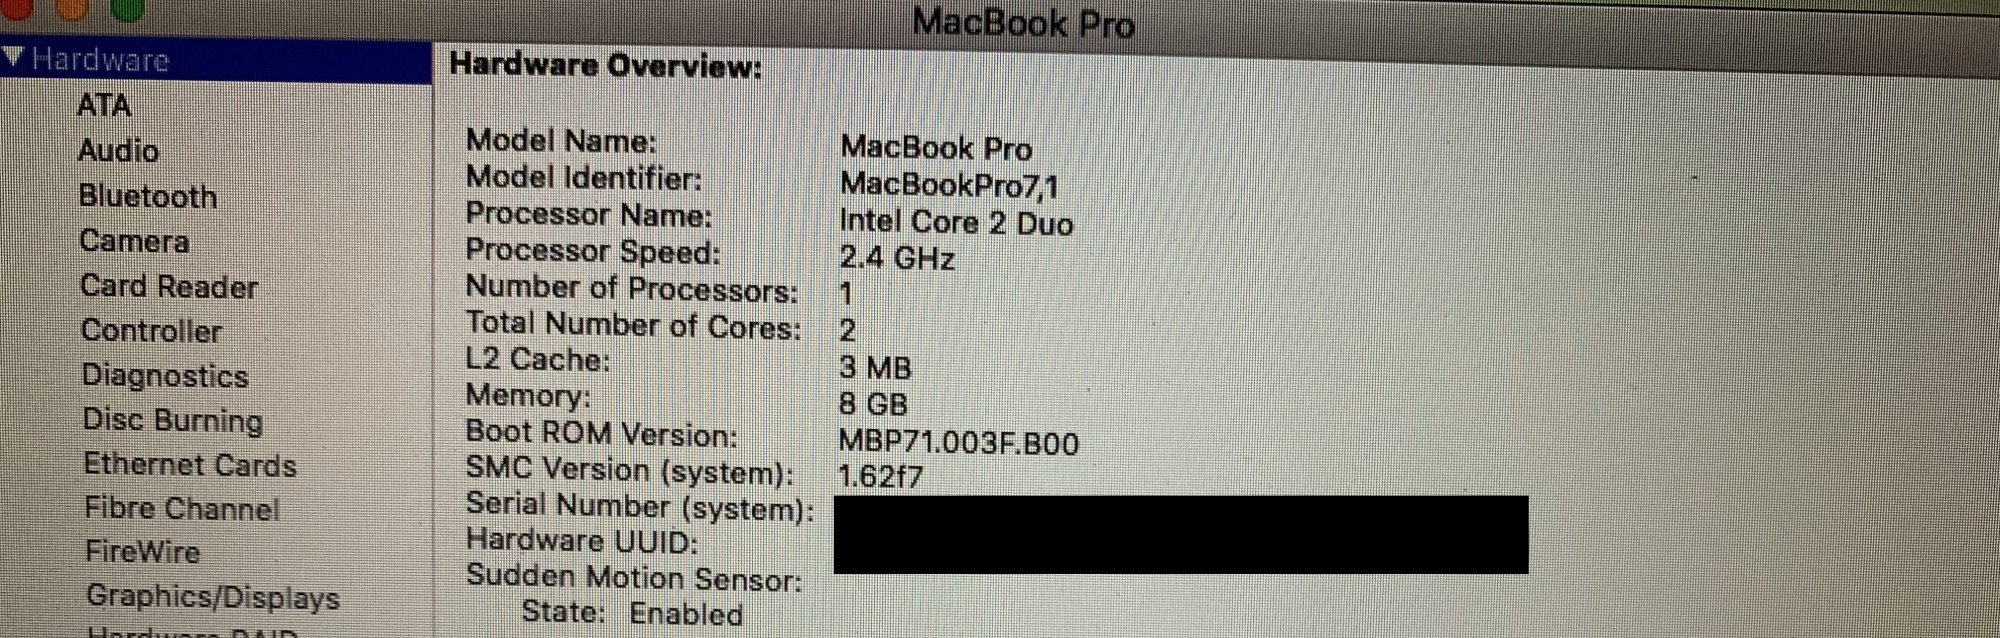 Jeg mistede min vej Resultat Tage en risiko Mid-2010 Macbook Pro 7,1 16GB Ram, 1TB SSD Upgrade - Benchmark Test Scores  Lower After Upgrades | MacRumors Forums